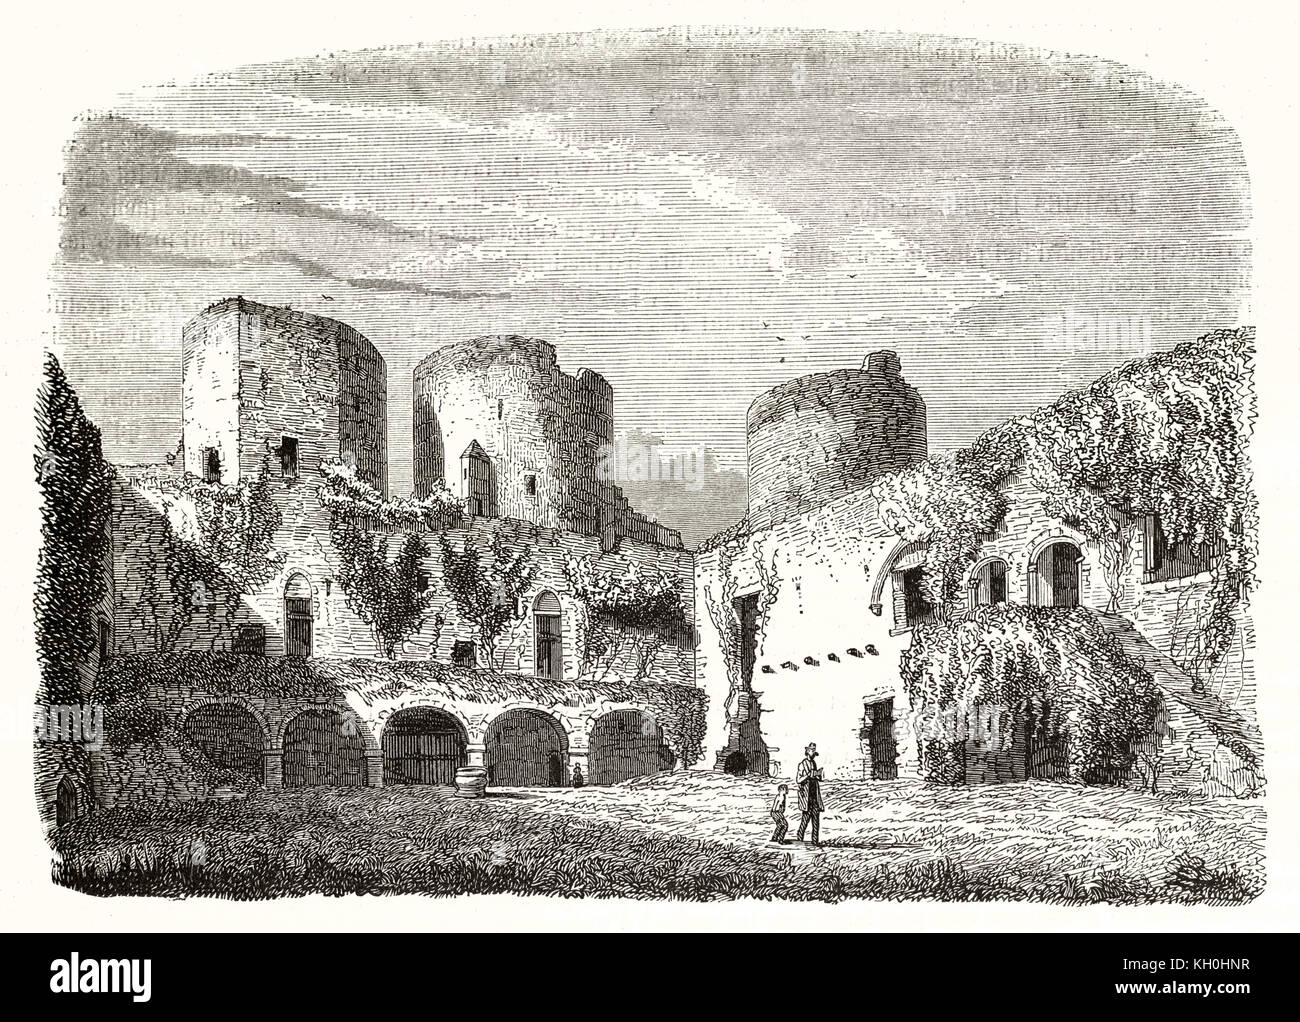 Old view of Chateau de Villandraut ruins. By unidentified author, publ. on Magasin Pittoresque, Paris, 1847 Stock Photo